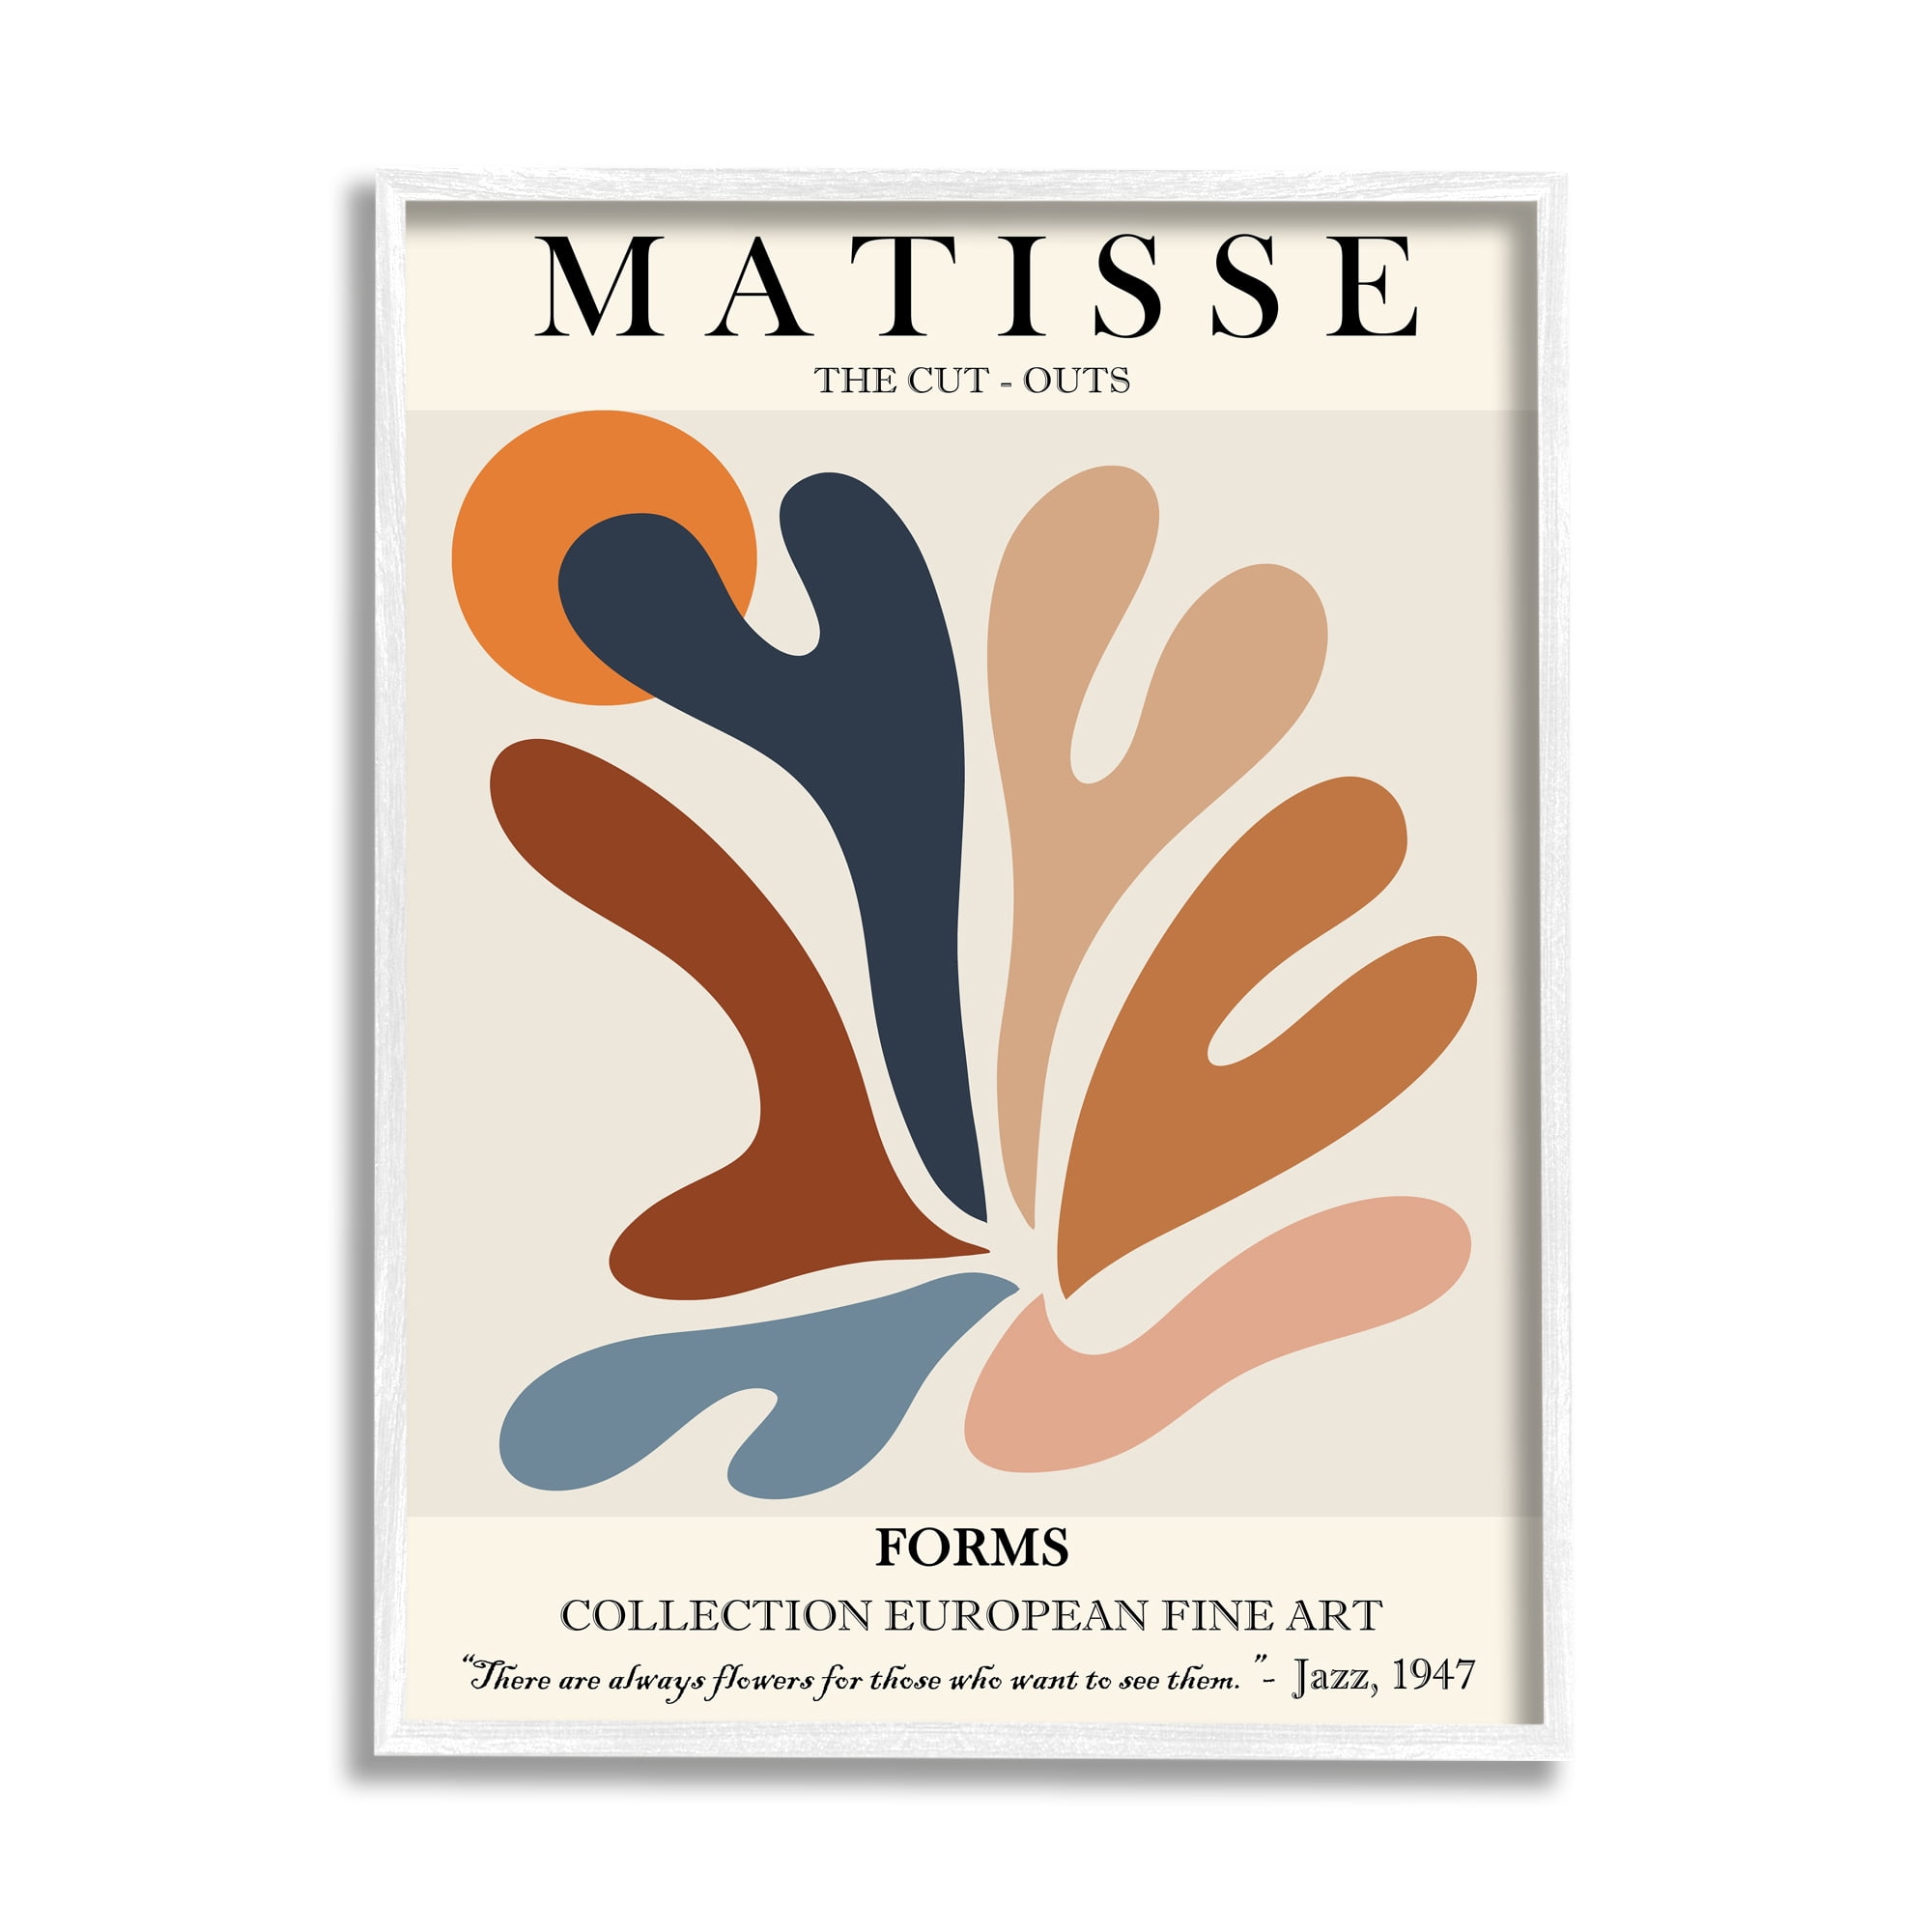 Unique design allows you to get a Matisse Black Gesso